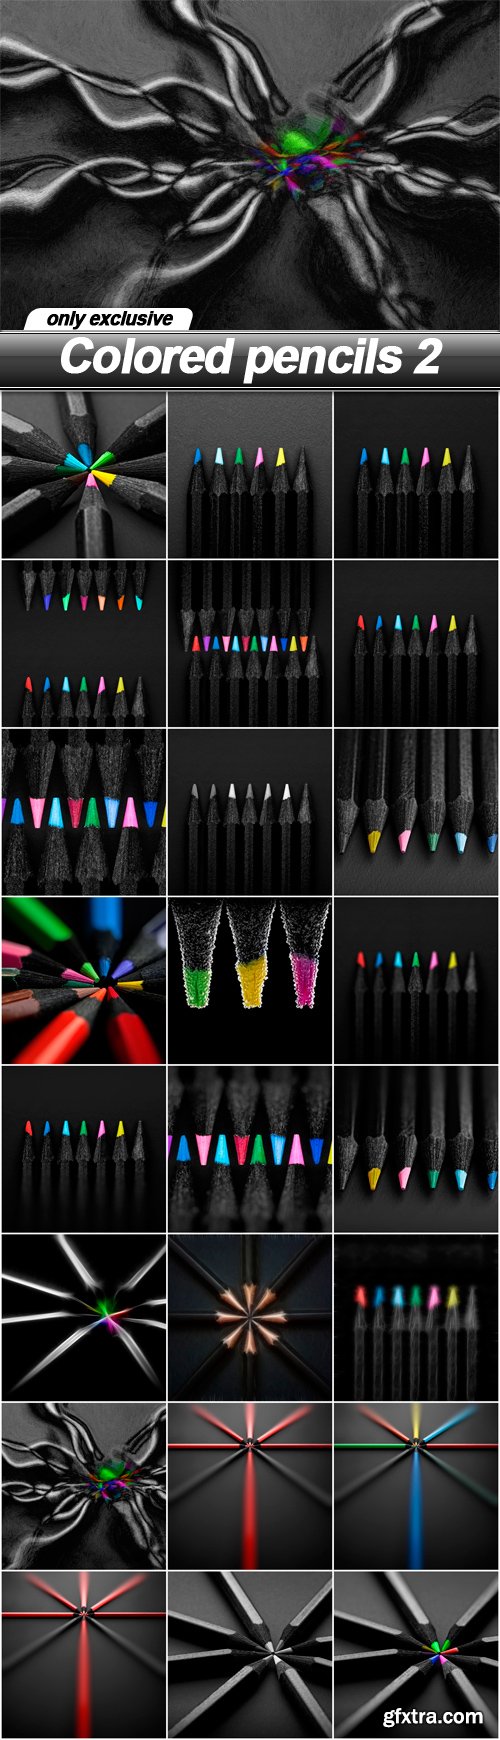 Colored pencils 2 - 24 UHQ JPEG